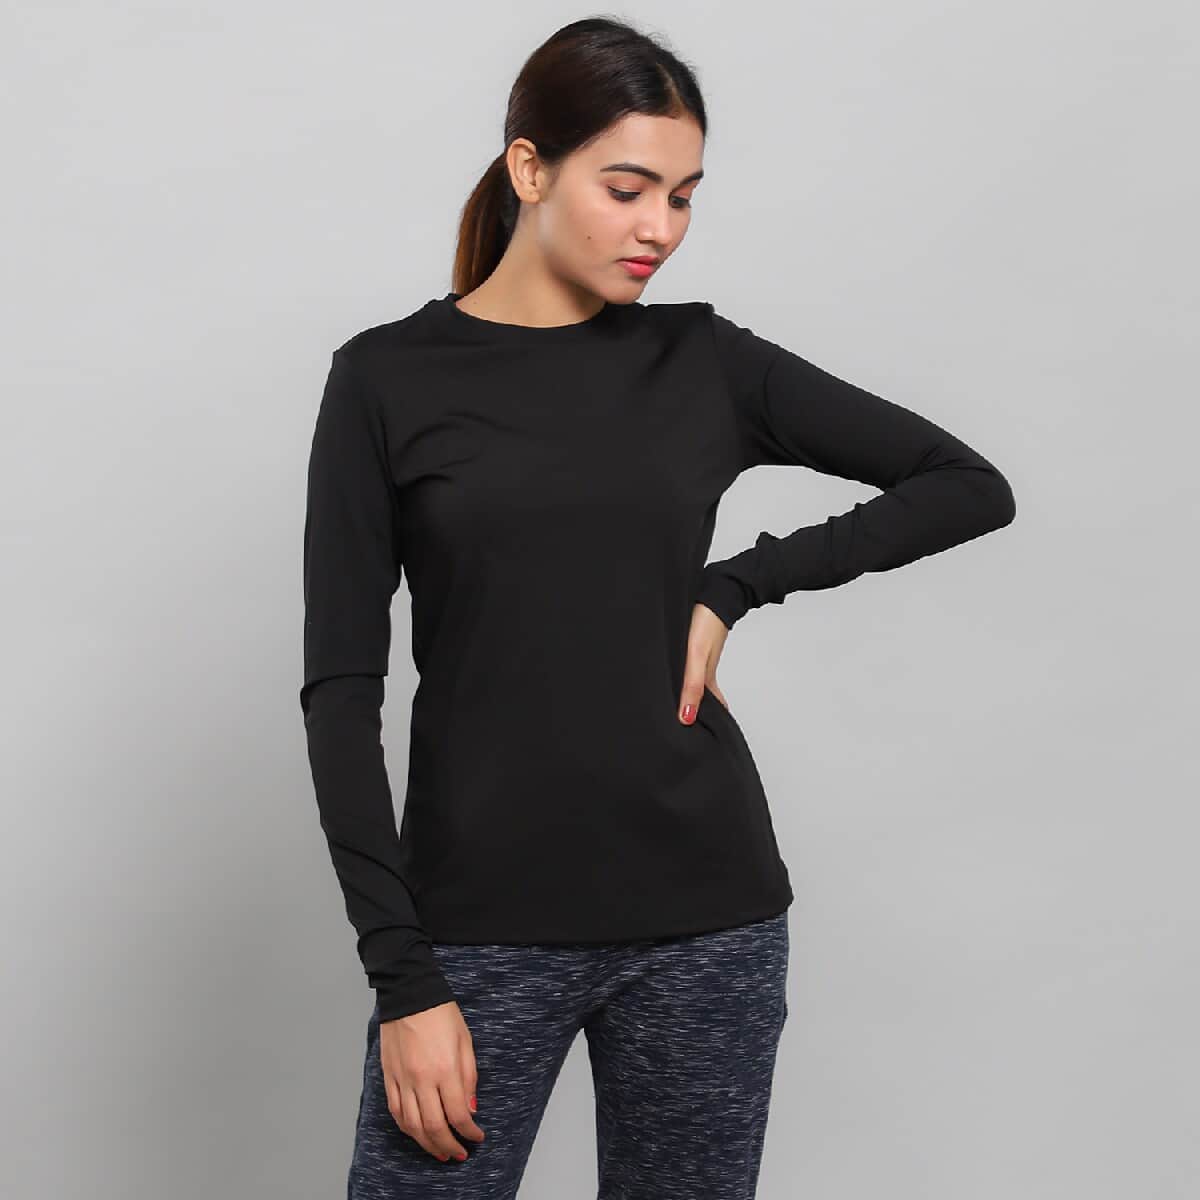 JOVIE Black 90% Polyester & 10% Spandex Long Sleeve T-Shirt- L image number 1